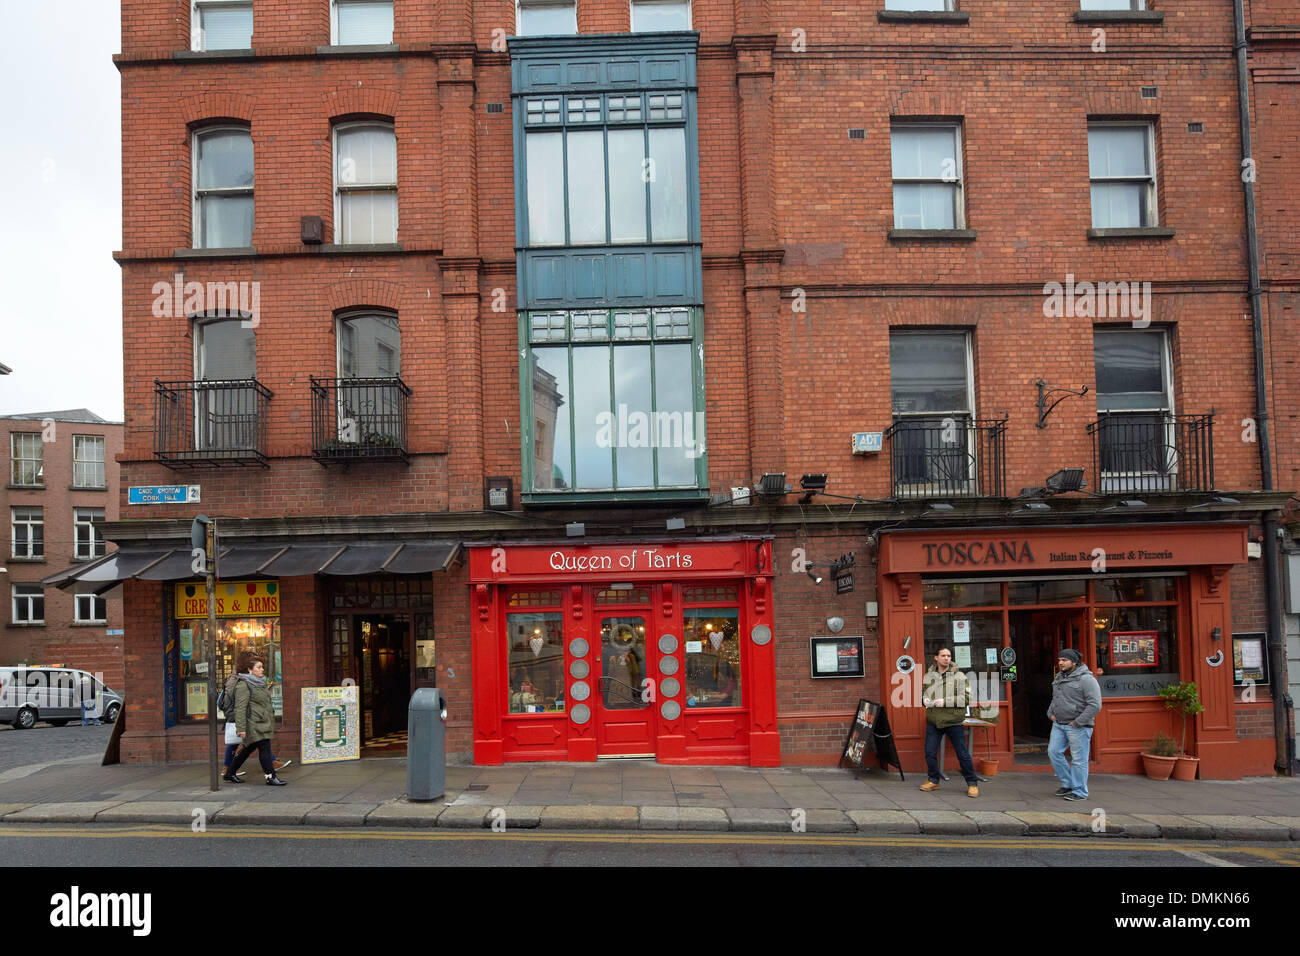 Queen of Tarts Bakery, Lord Edward Street, Dublin, Ireland, Europe Stock Photo